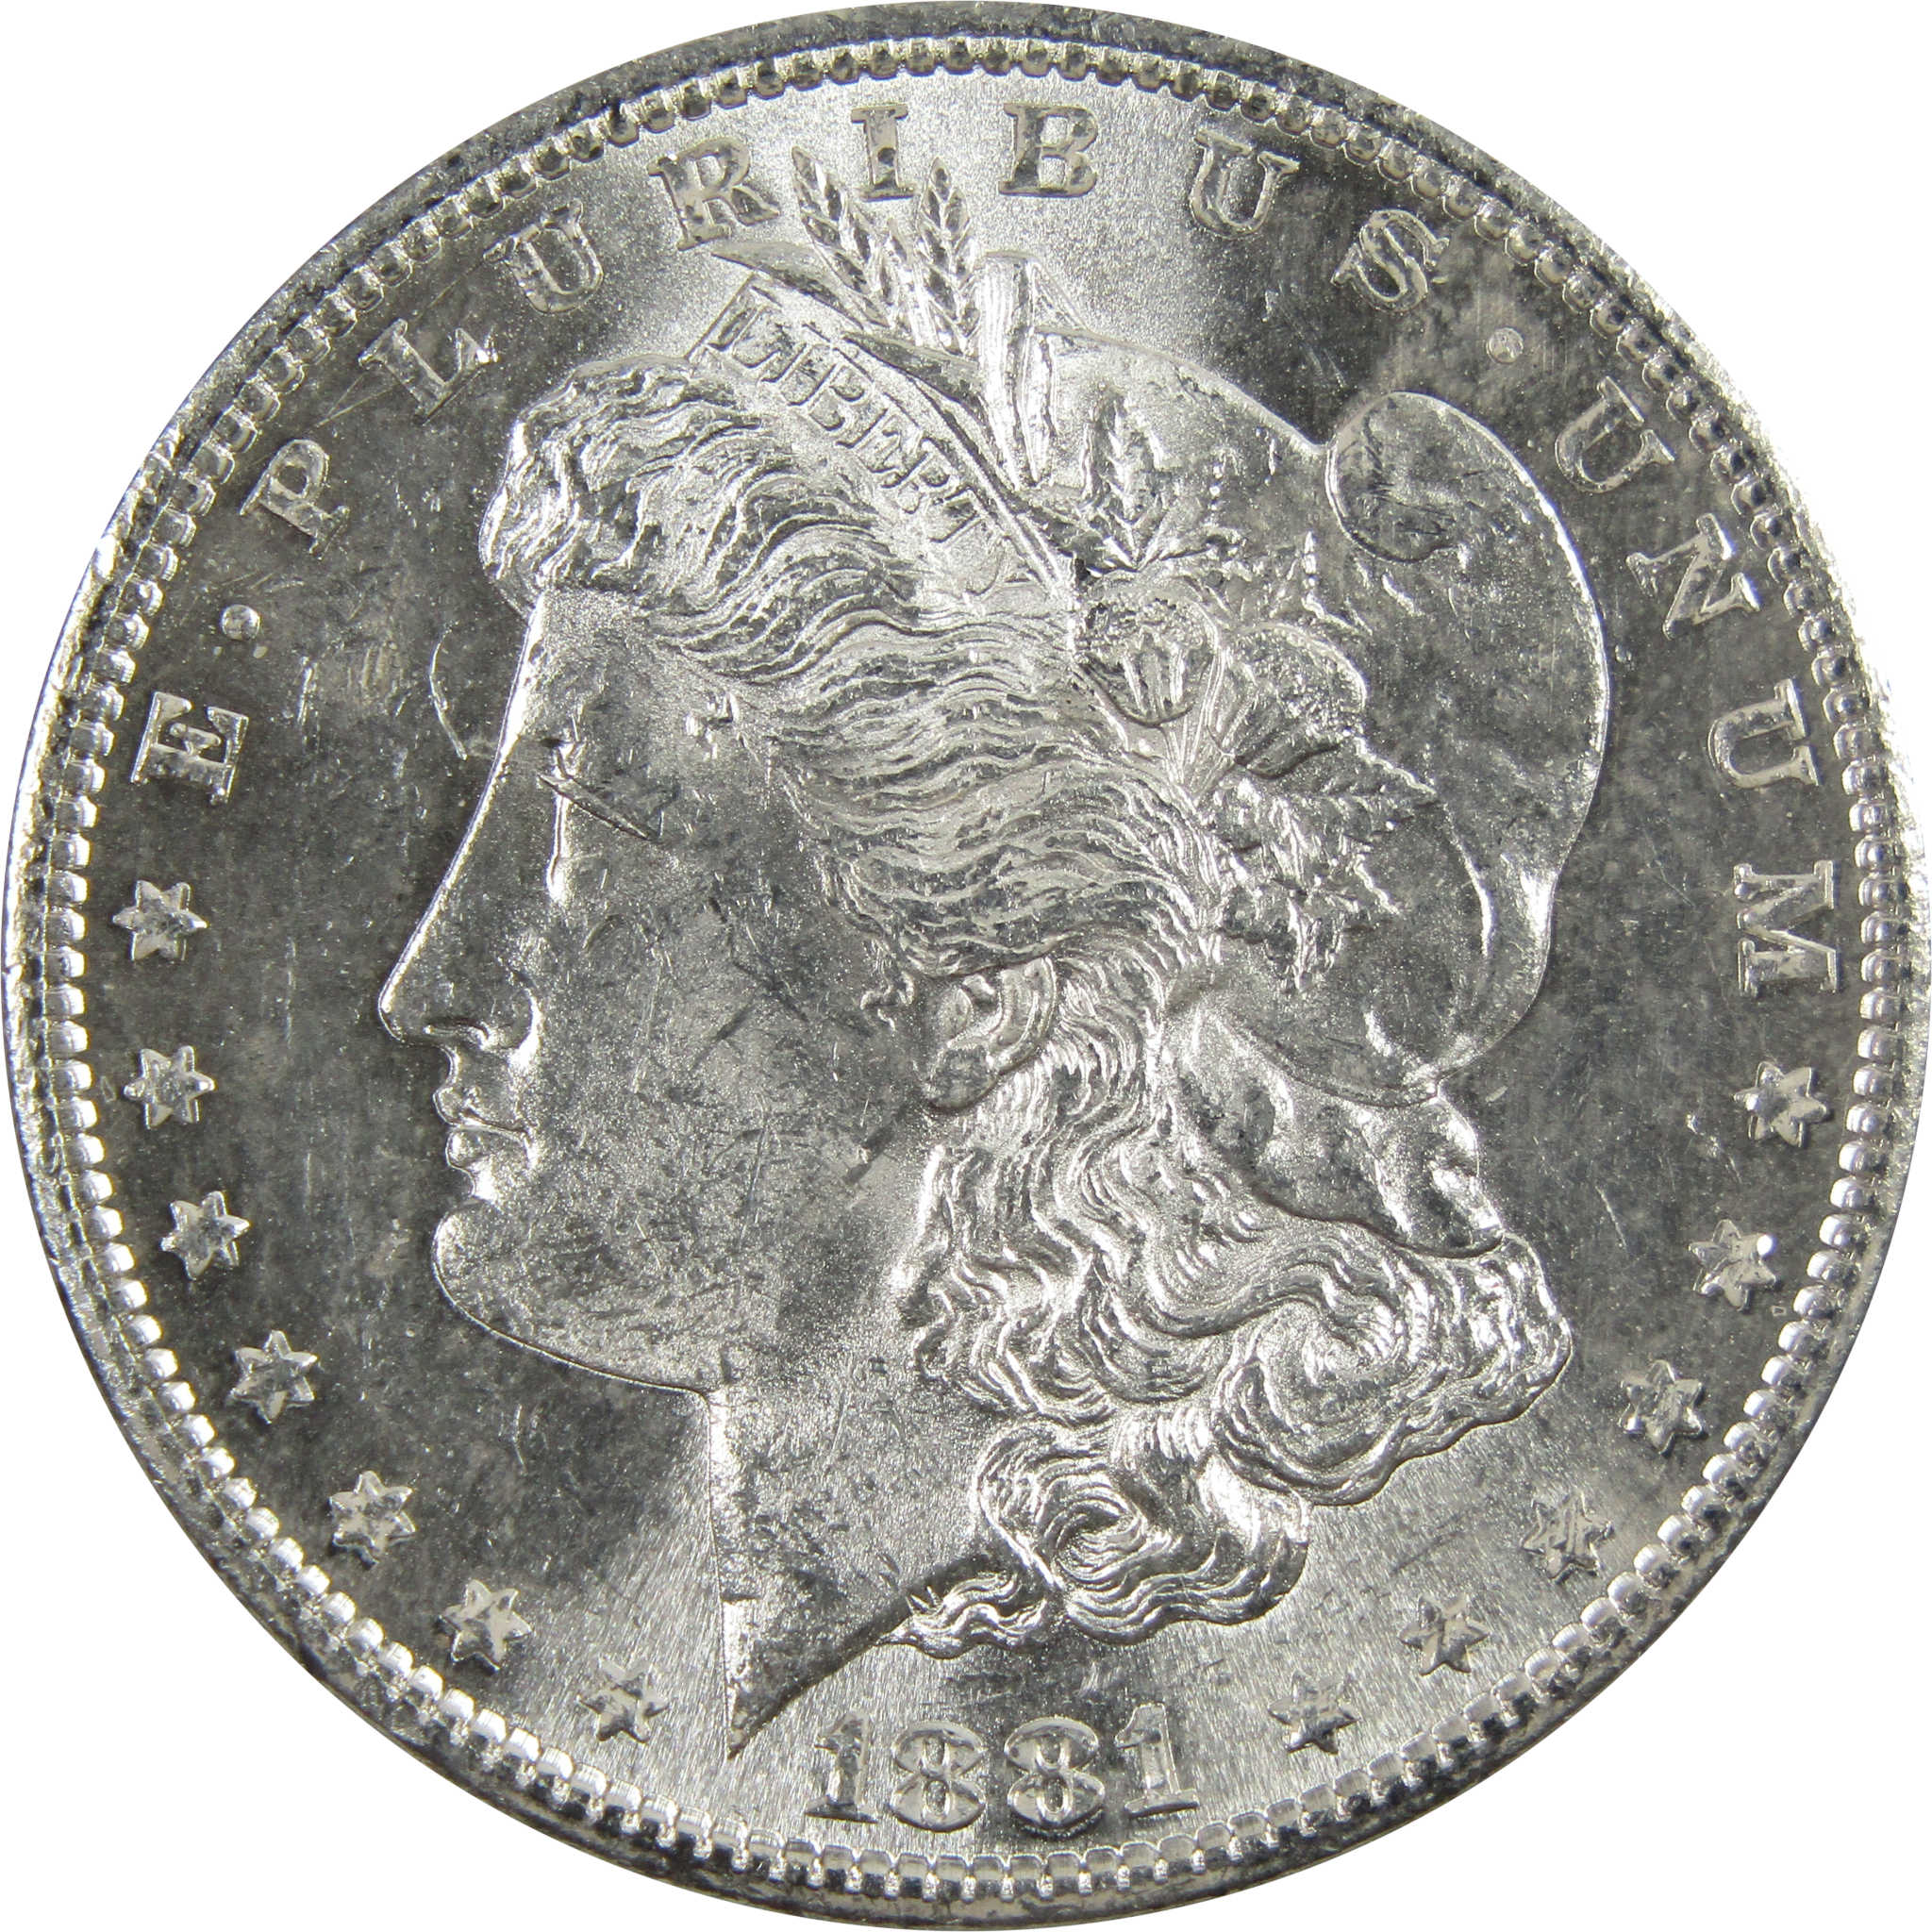 1881 S Morgan Dollar BU Uncirculated 90% Silver $1 Coin SKU:I5316 - Morgan coin - Morgan silver dollar - Morgan silver dollar for sale - Profile Coins &amp; Collectibles